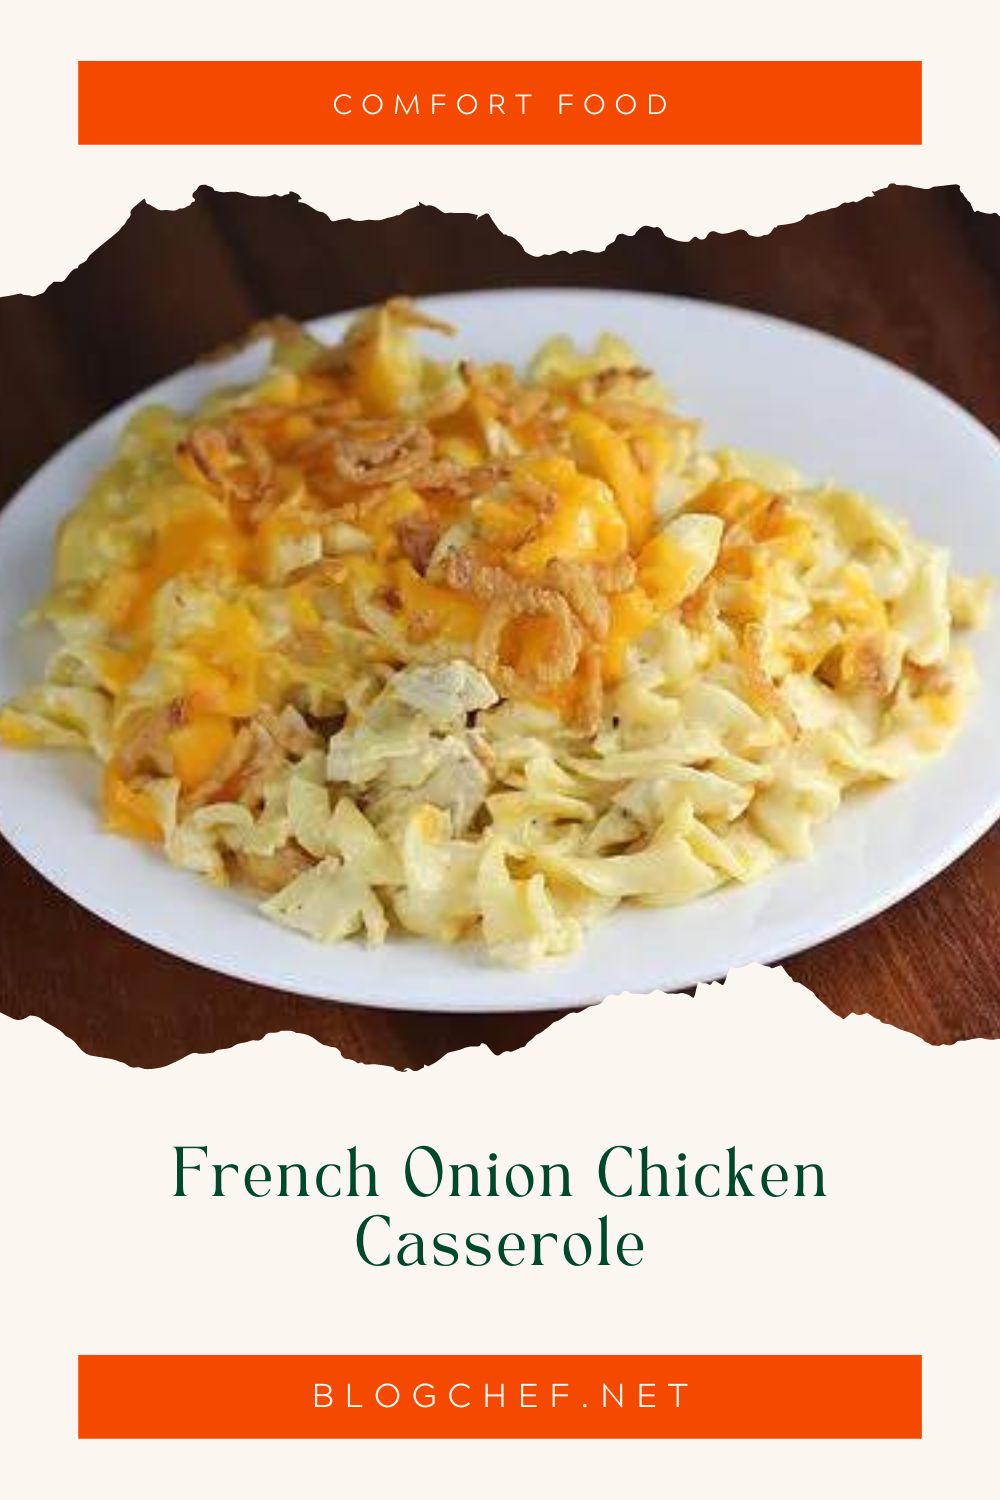 French Onion chicken casserole recipe.